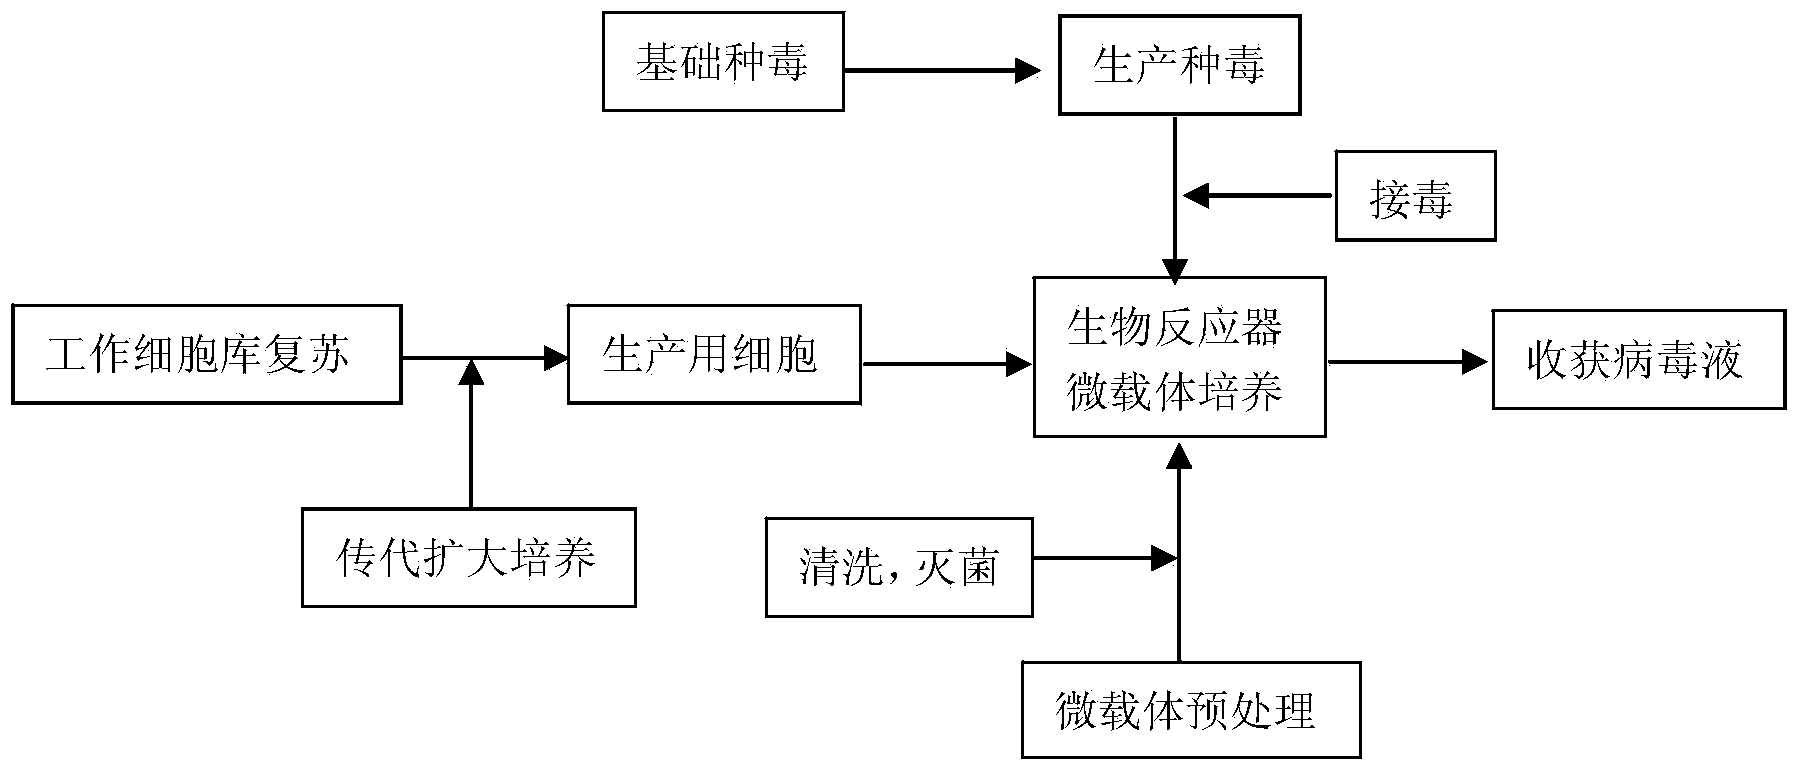 Production method of porcine circovirus type 2